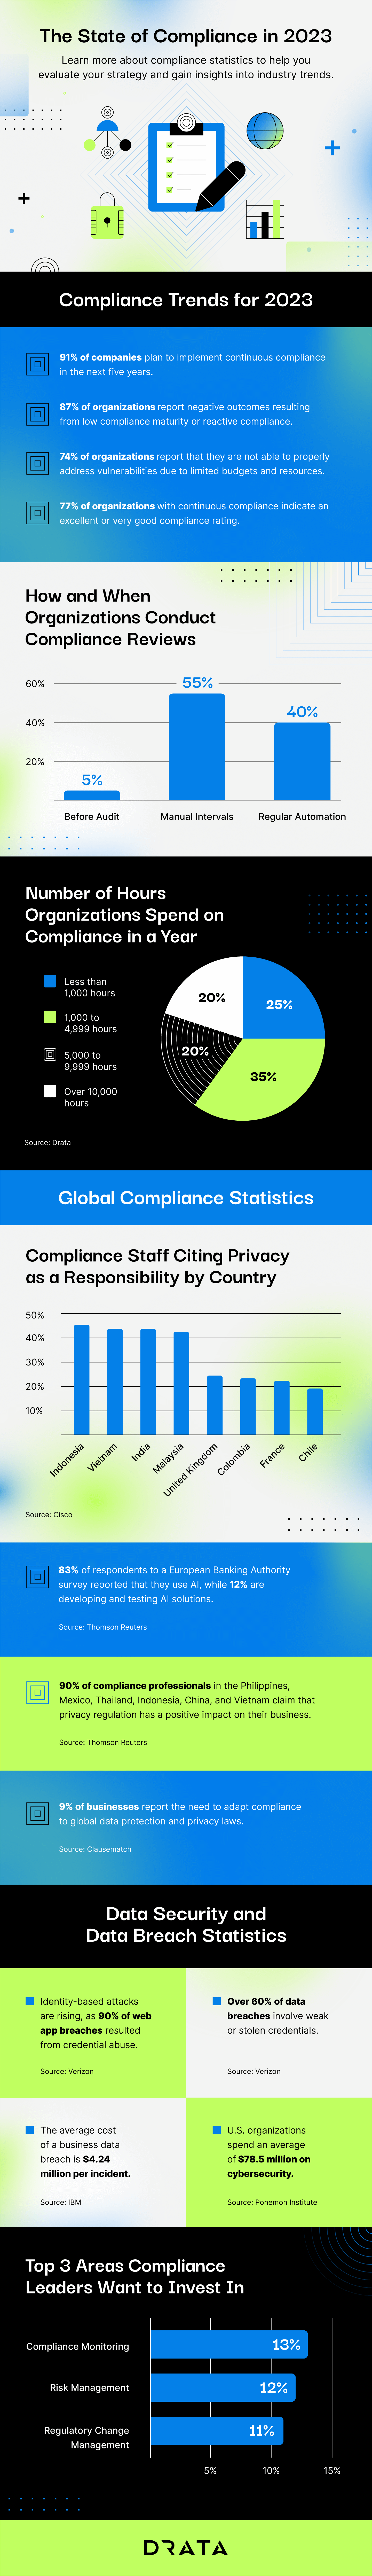 Compliance statistics infographic courtesy of Drata.